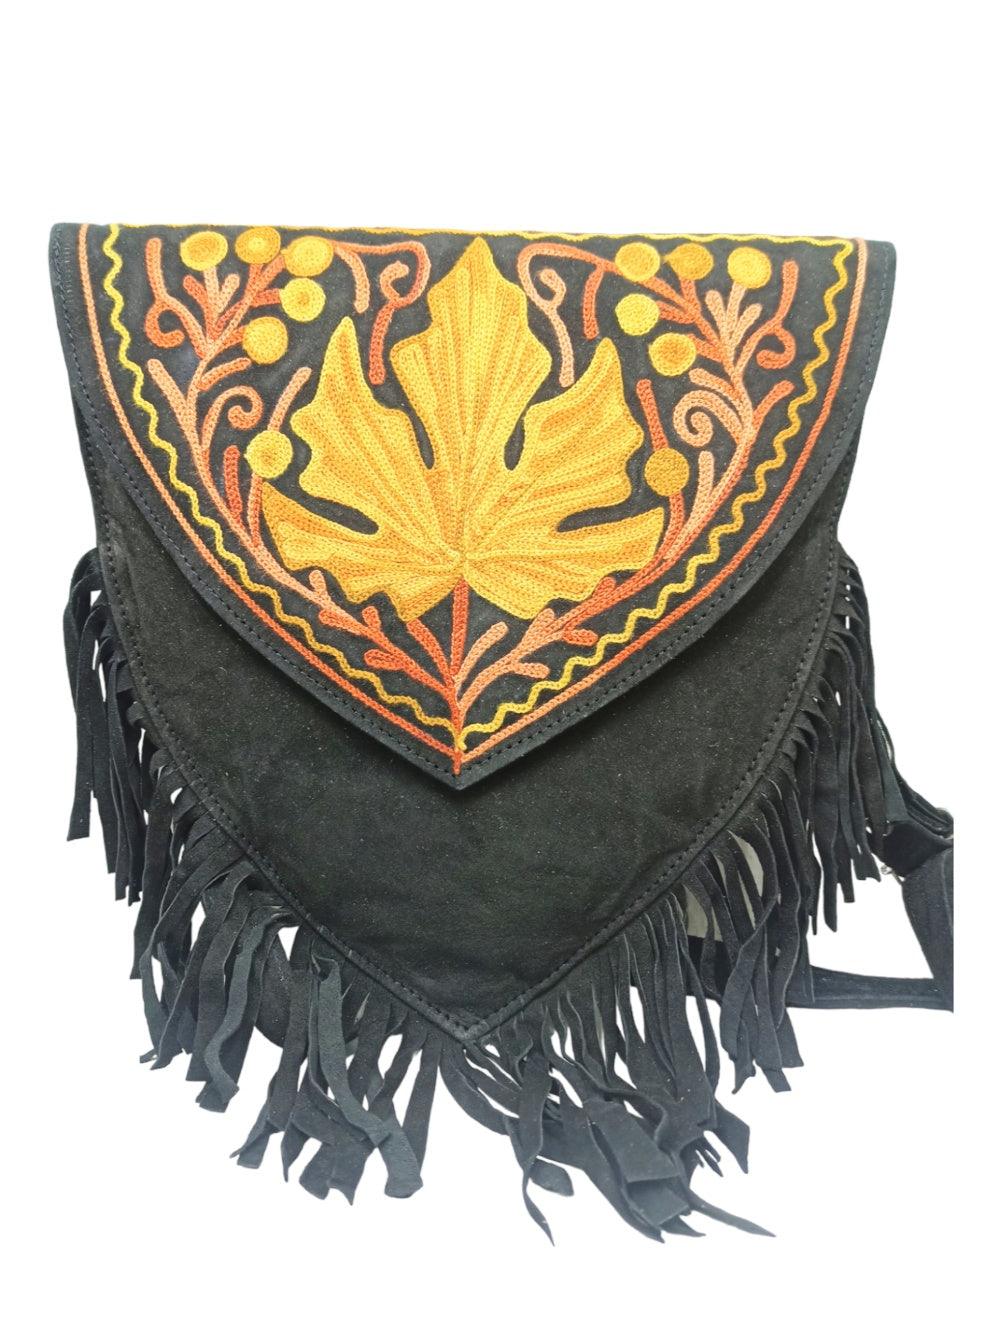 Suede Leather Heart Bag | Embroidery Heart Bag | Sling Bag For Girls - ZANSKAR ARTS